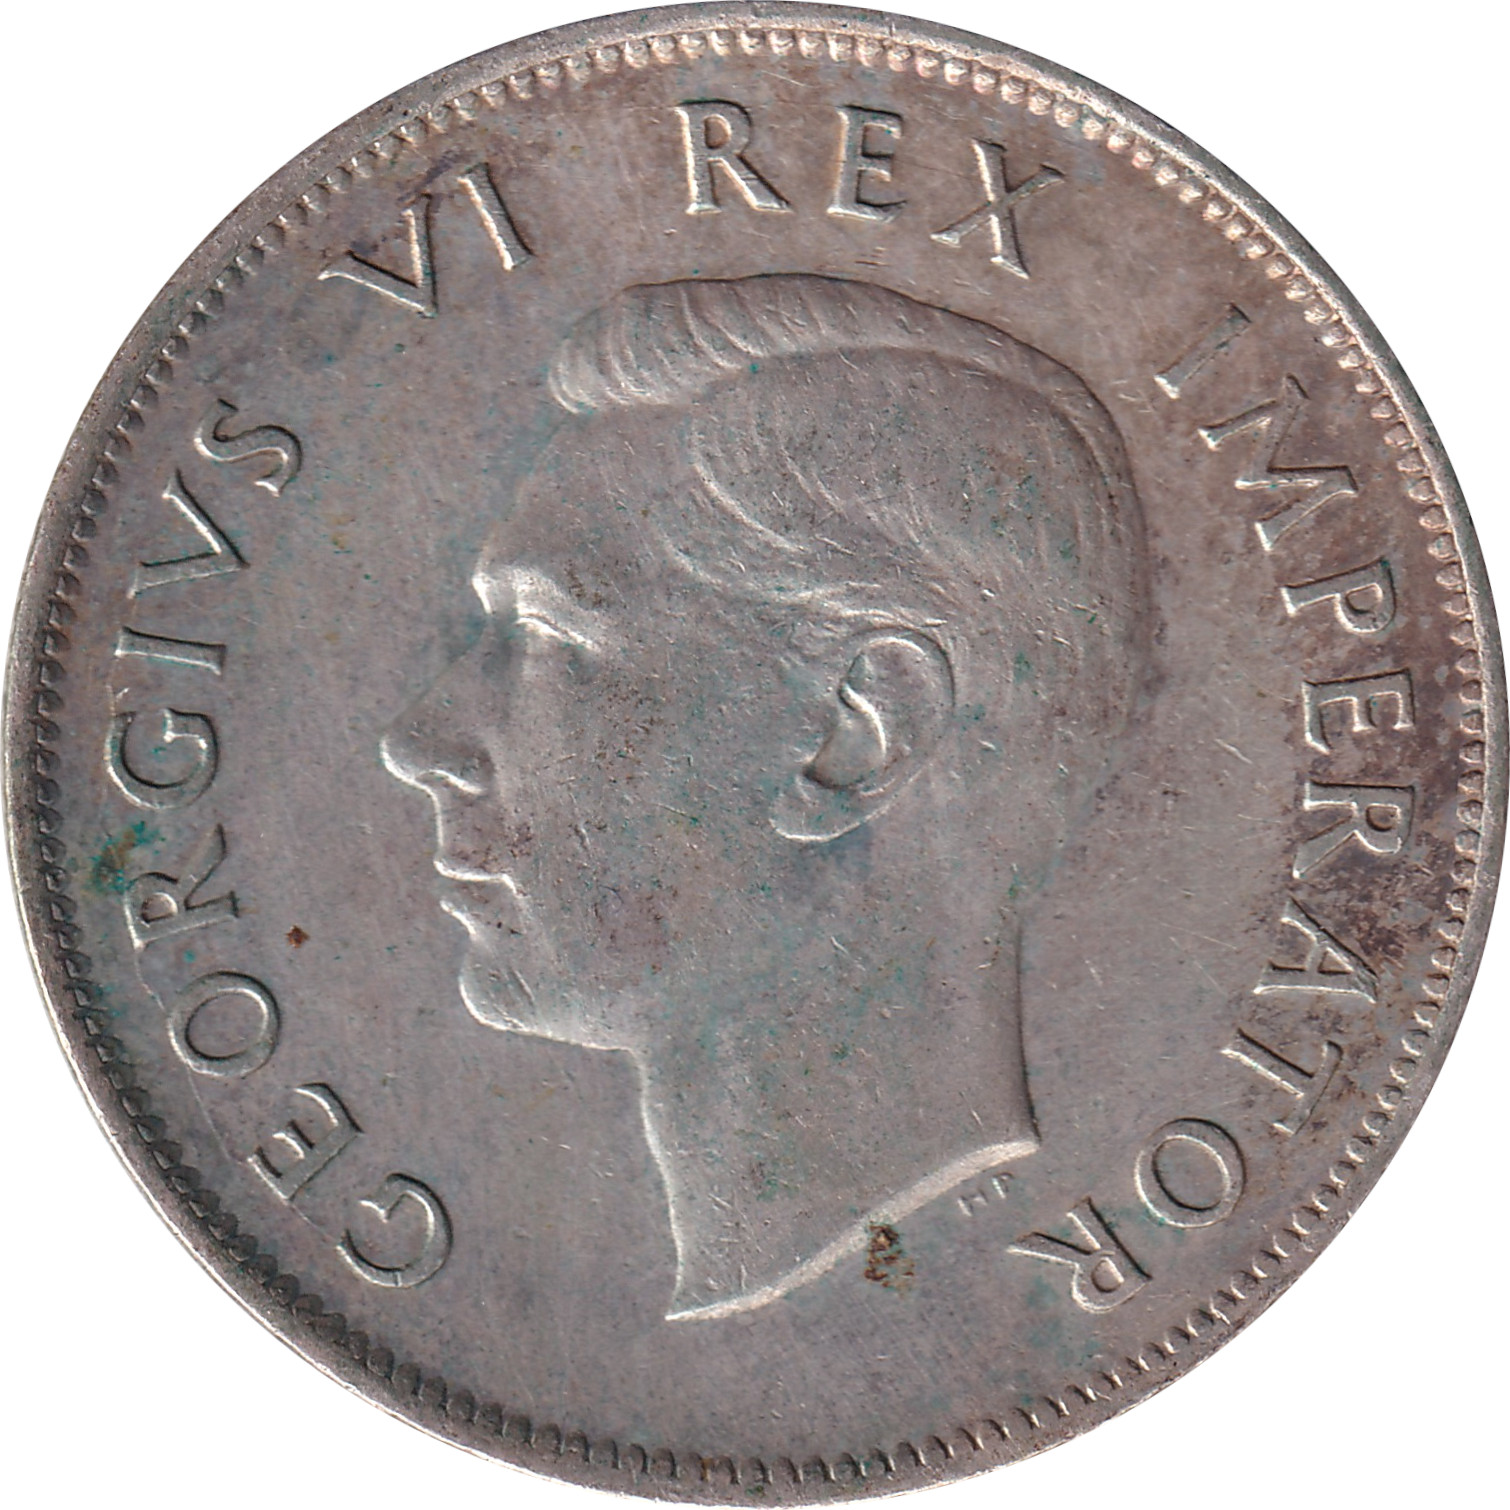 2 1/2 shillings - George VI